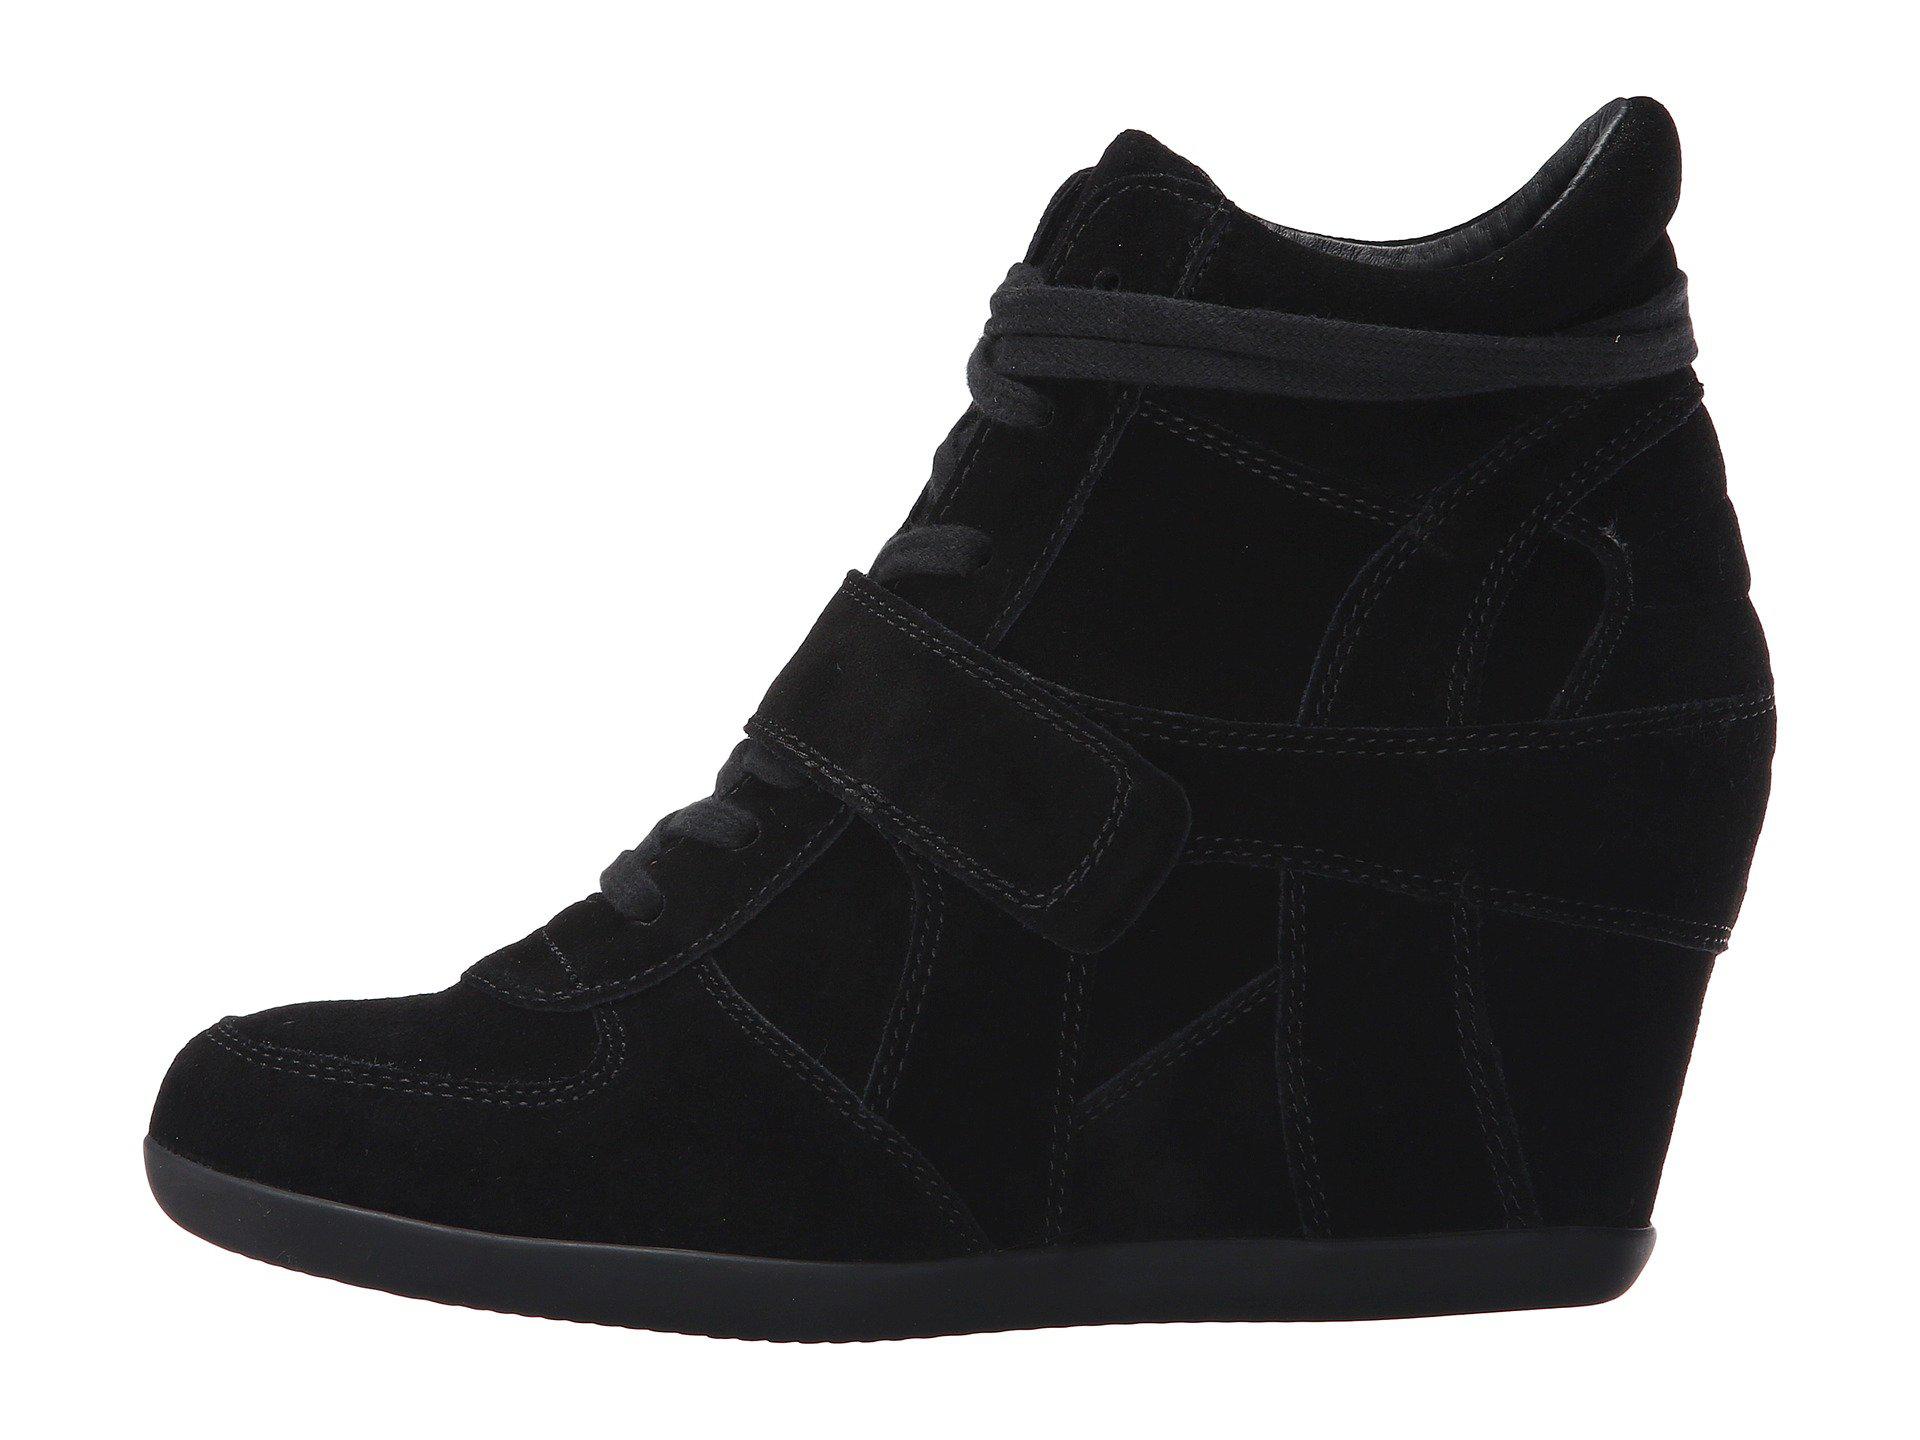 Lyst - Ash Bowie (black/black/black) Women's Lace-up Boots in Black ...